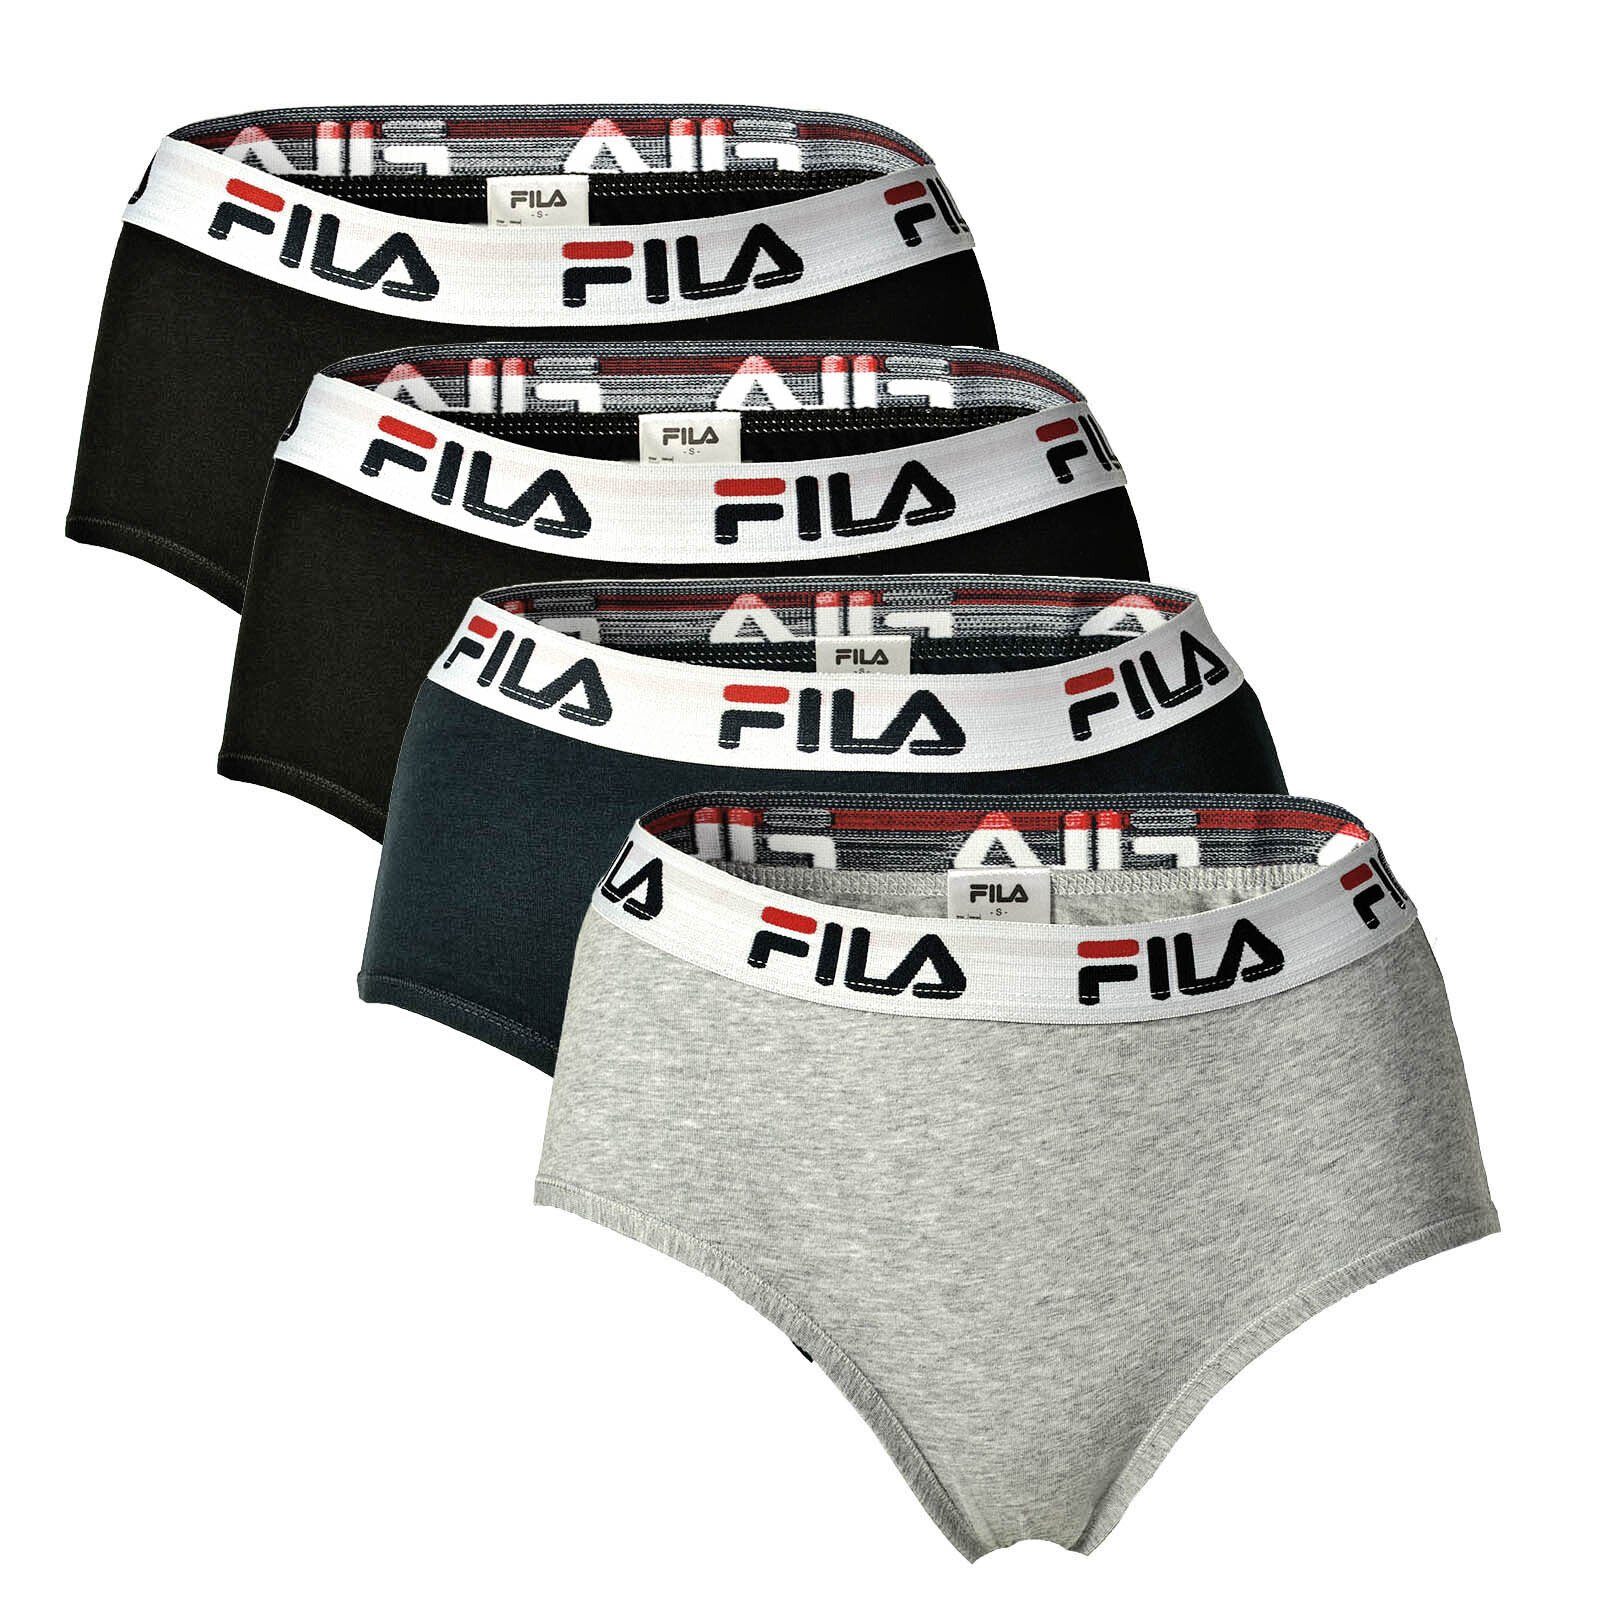 Fila Panty Damen Hipster - 4er Pack Slip, Logo-Bund, Cotton Schwarz/Grau/Marine